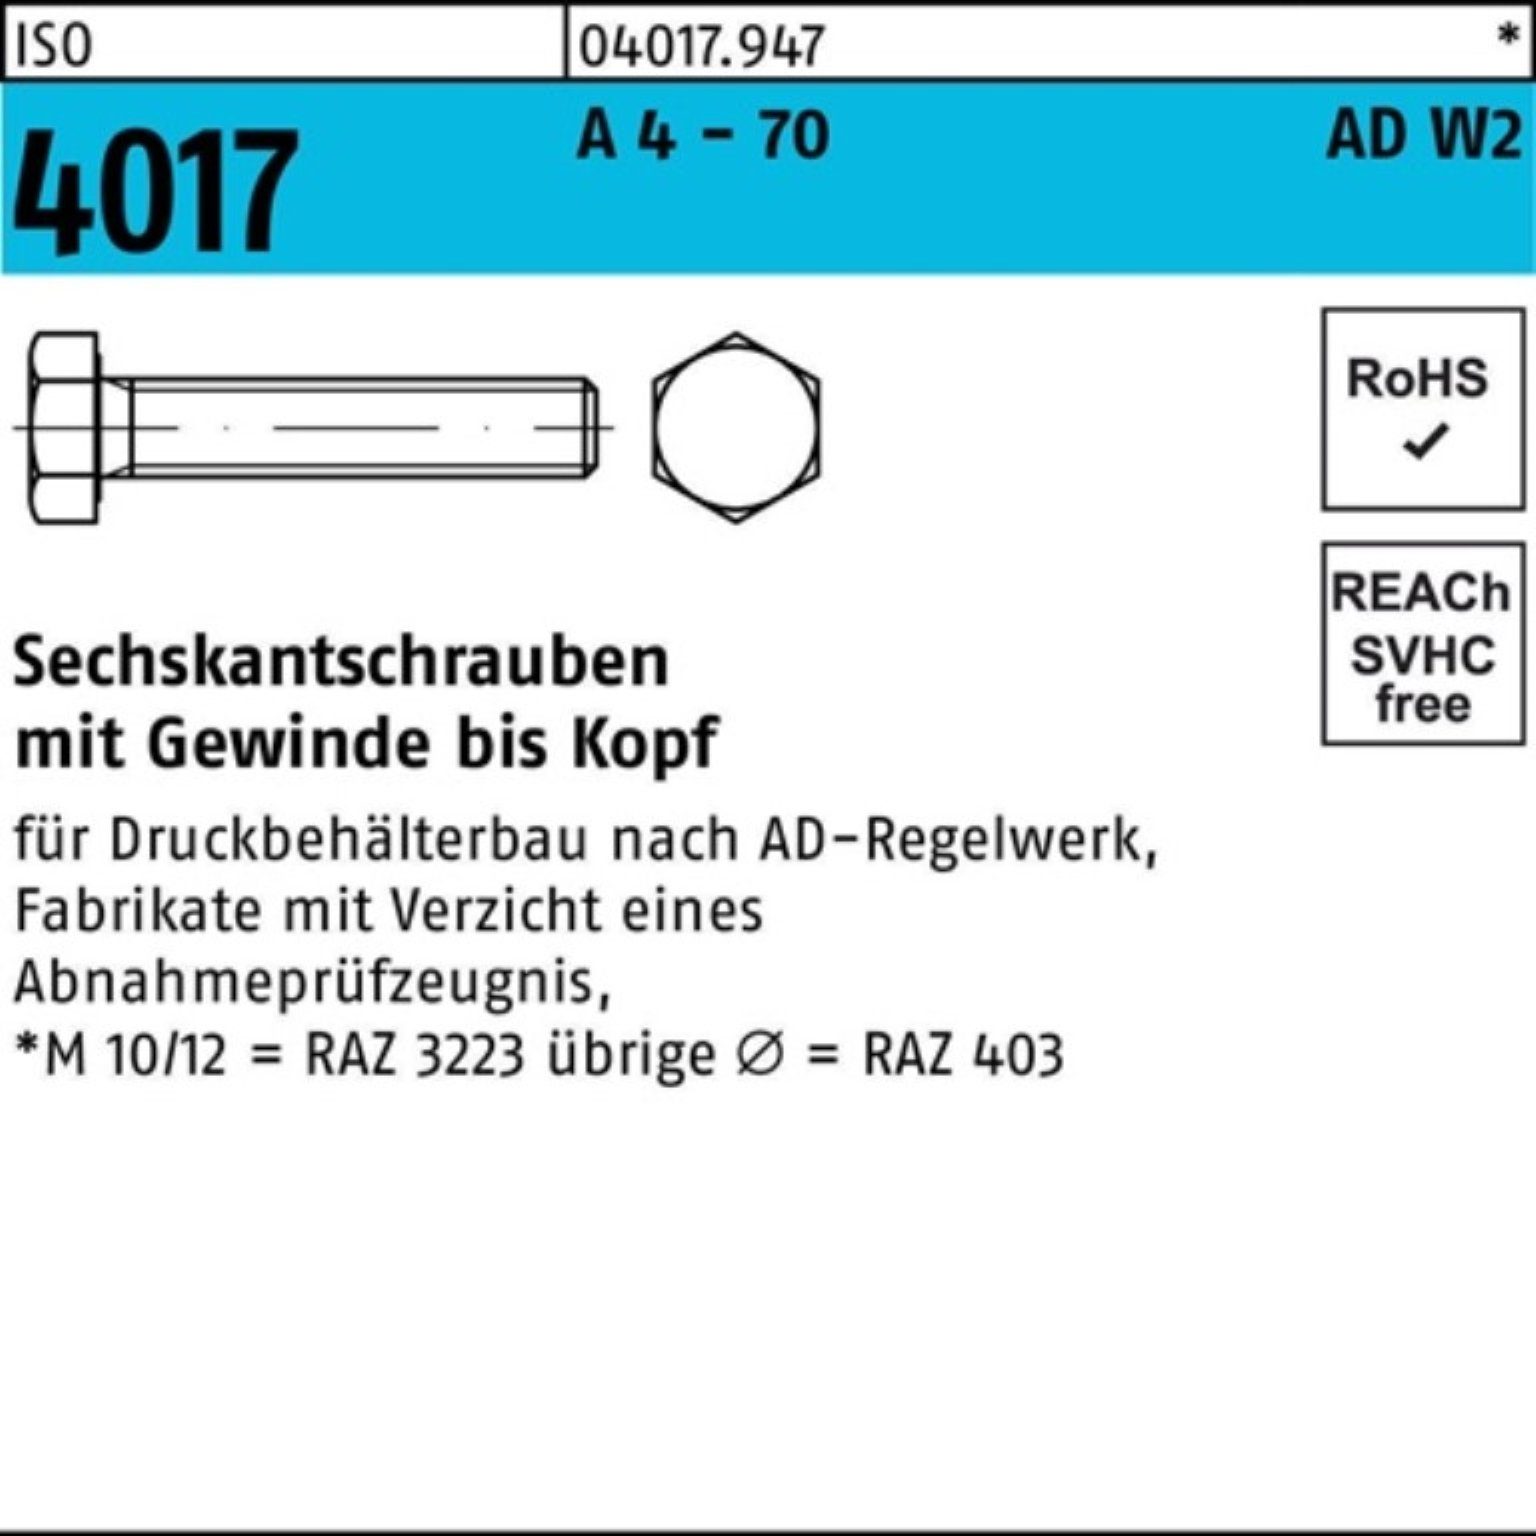 Bufab Sechskantschraube 100er 110 ISO St A 1 AD-W2 70 Sechskantschraube Pack 4 - VG 4017 M24x